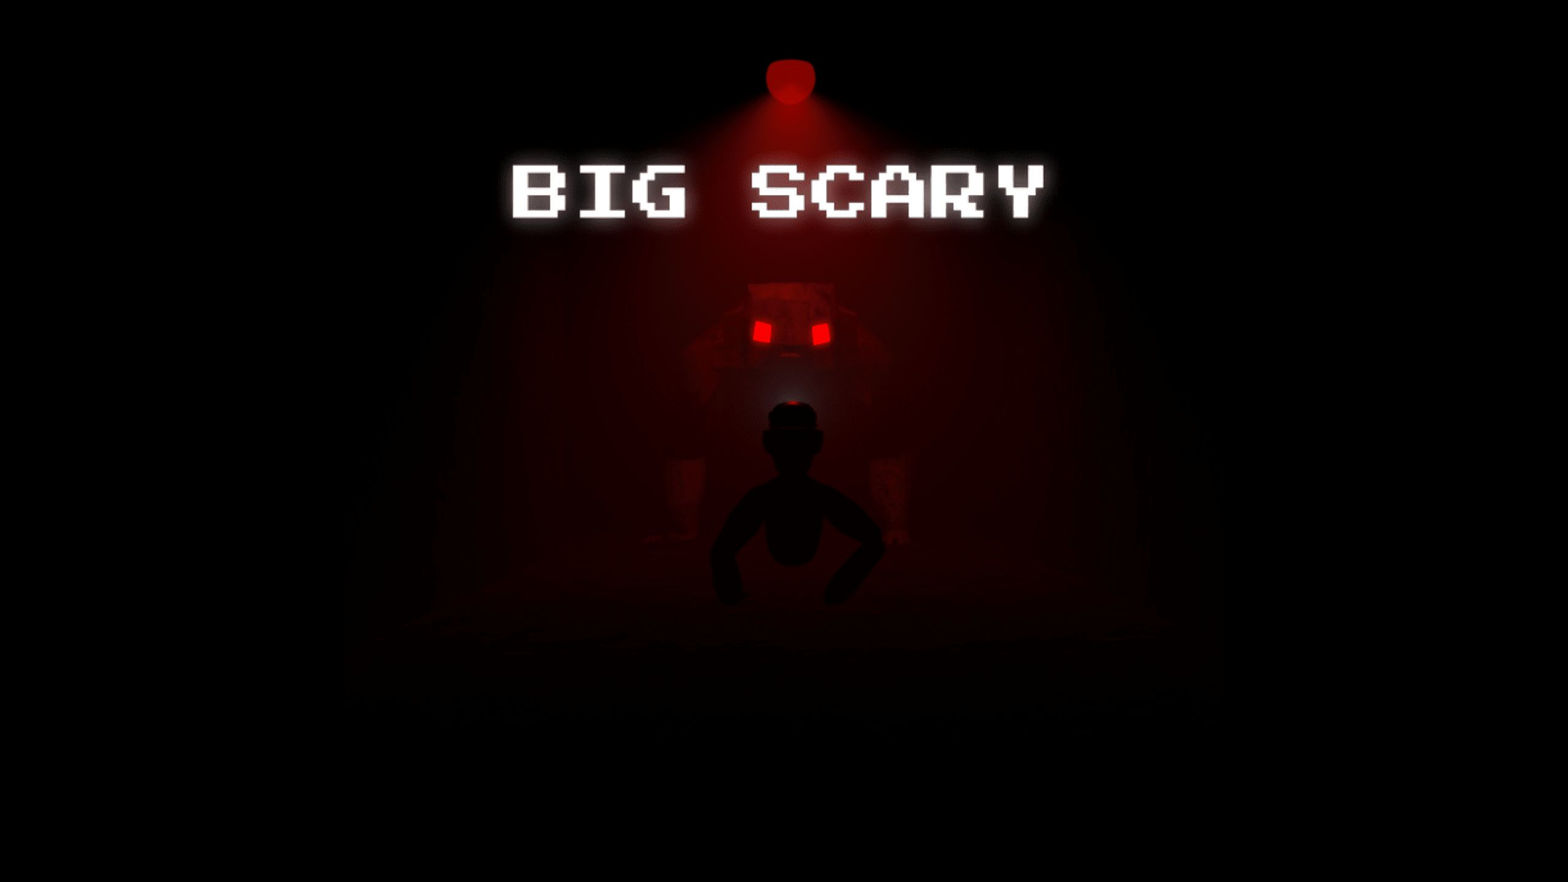 Big scary